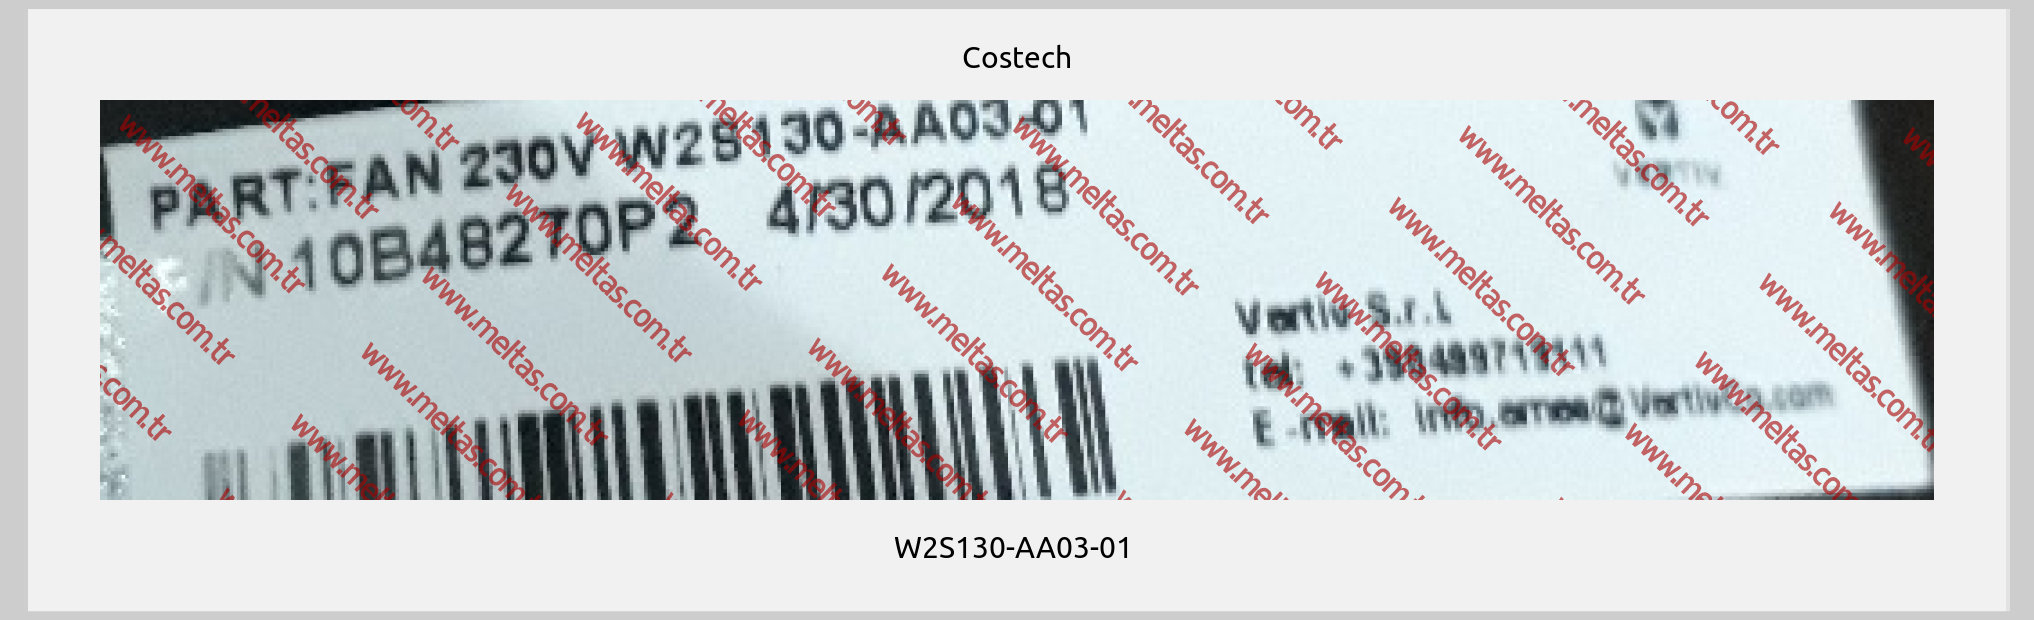 Costech - W2S130-AA03-01 